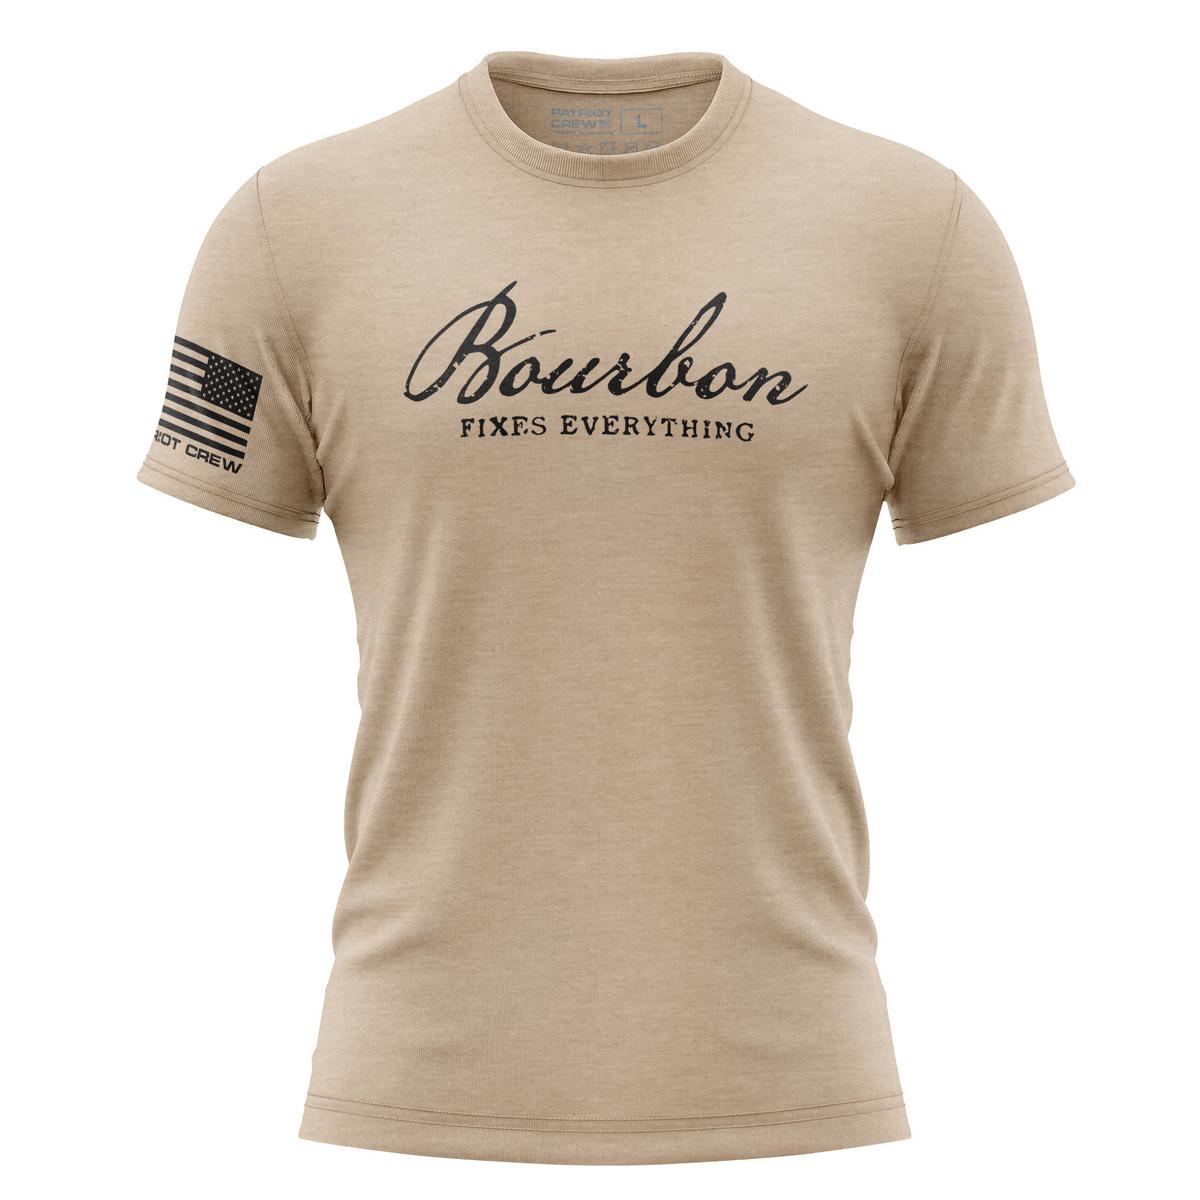 Bourbon Fixes Everything T-Shirt